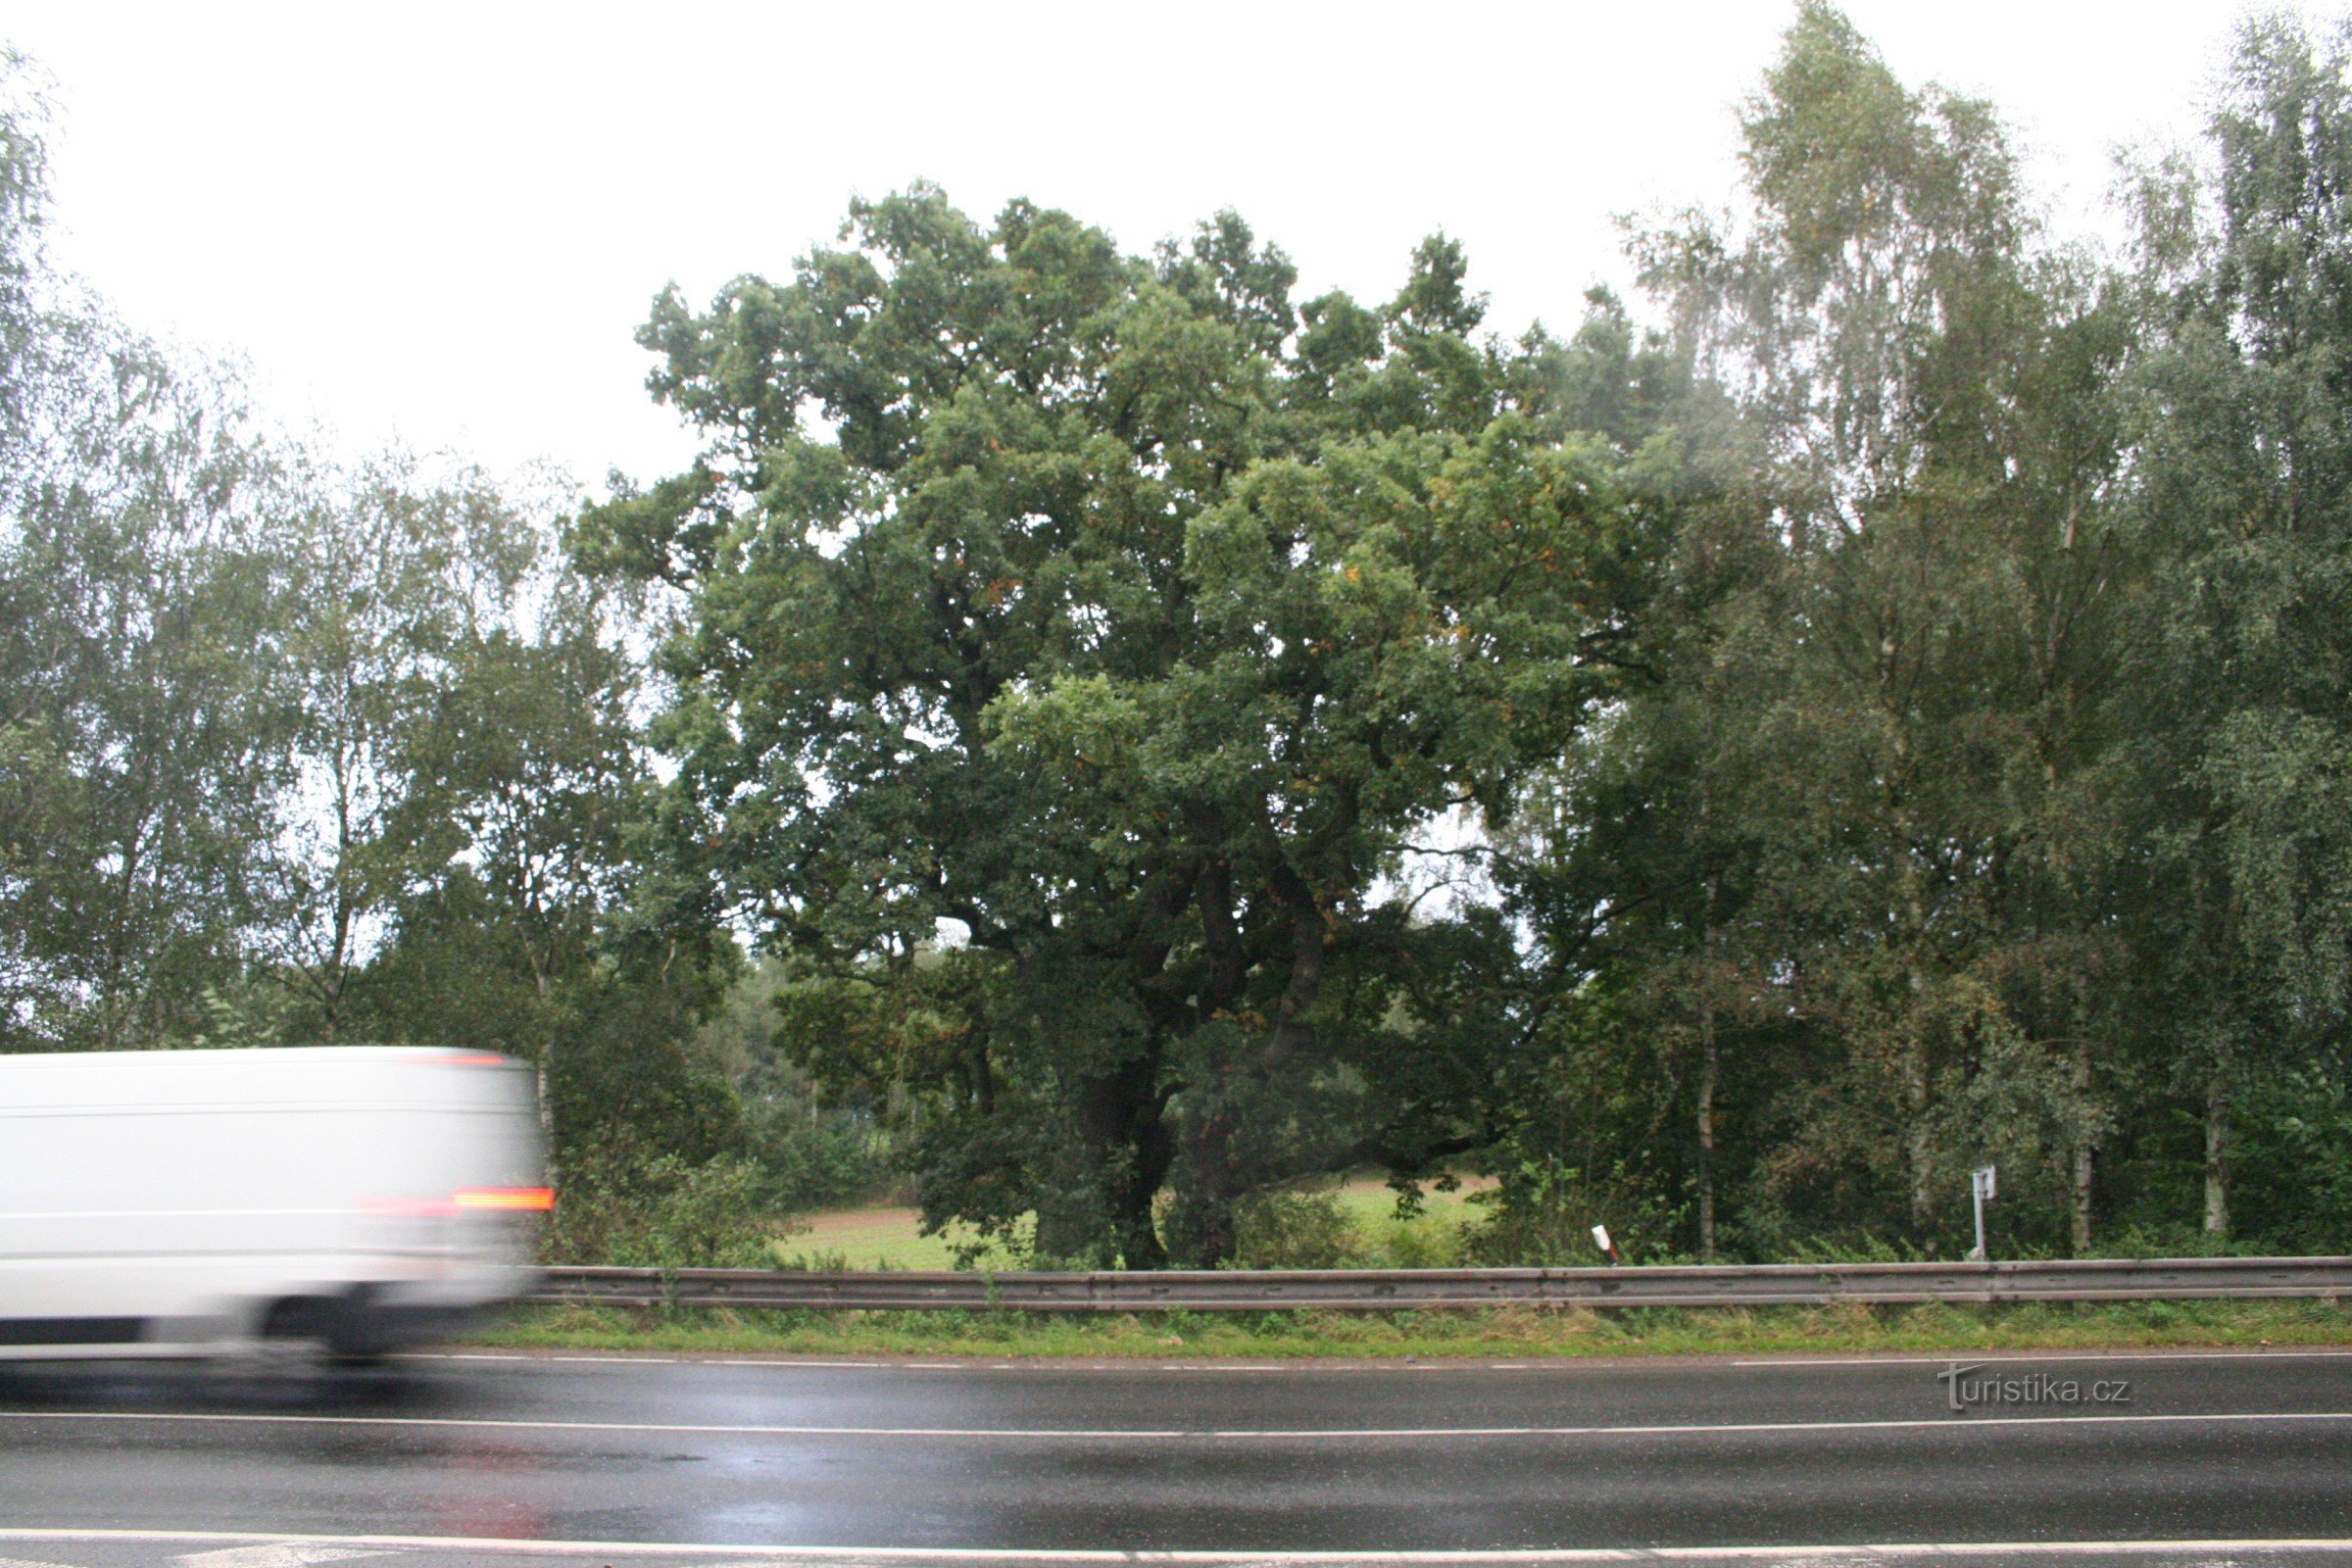 One of two memorial oak trees